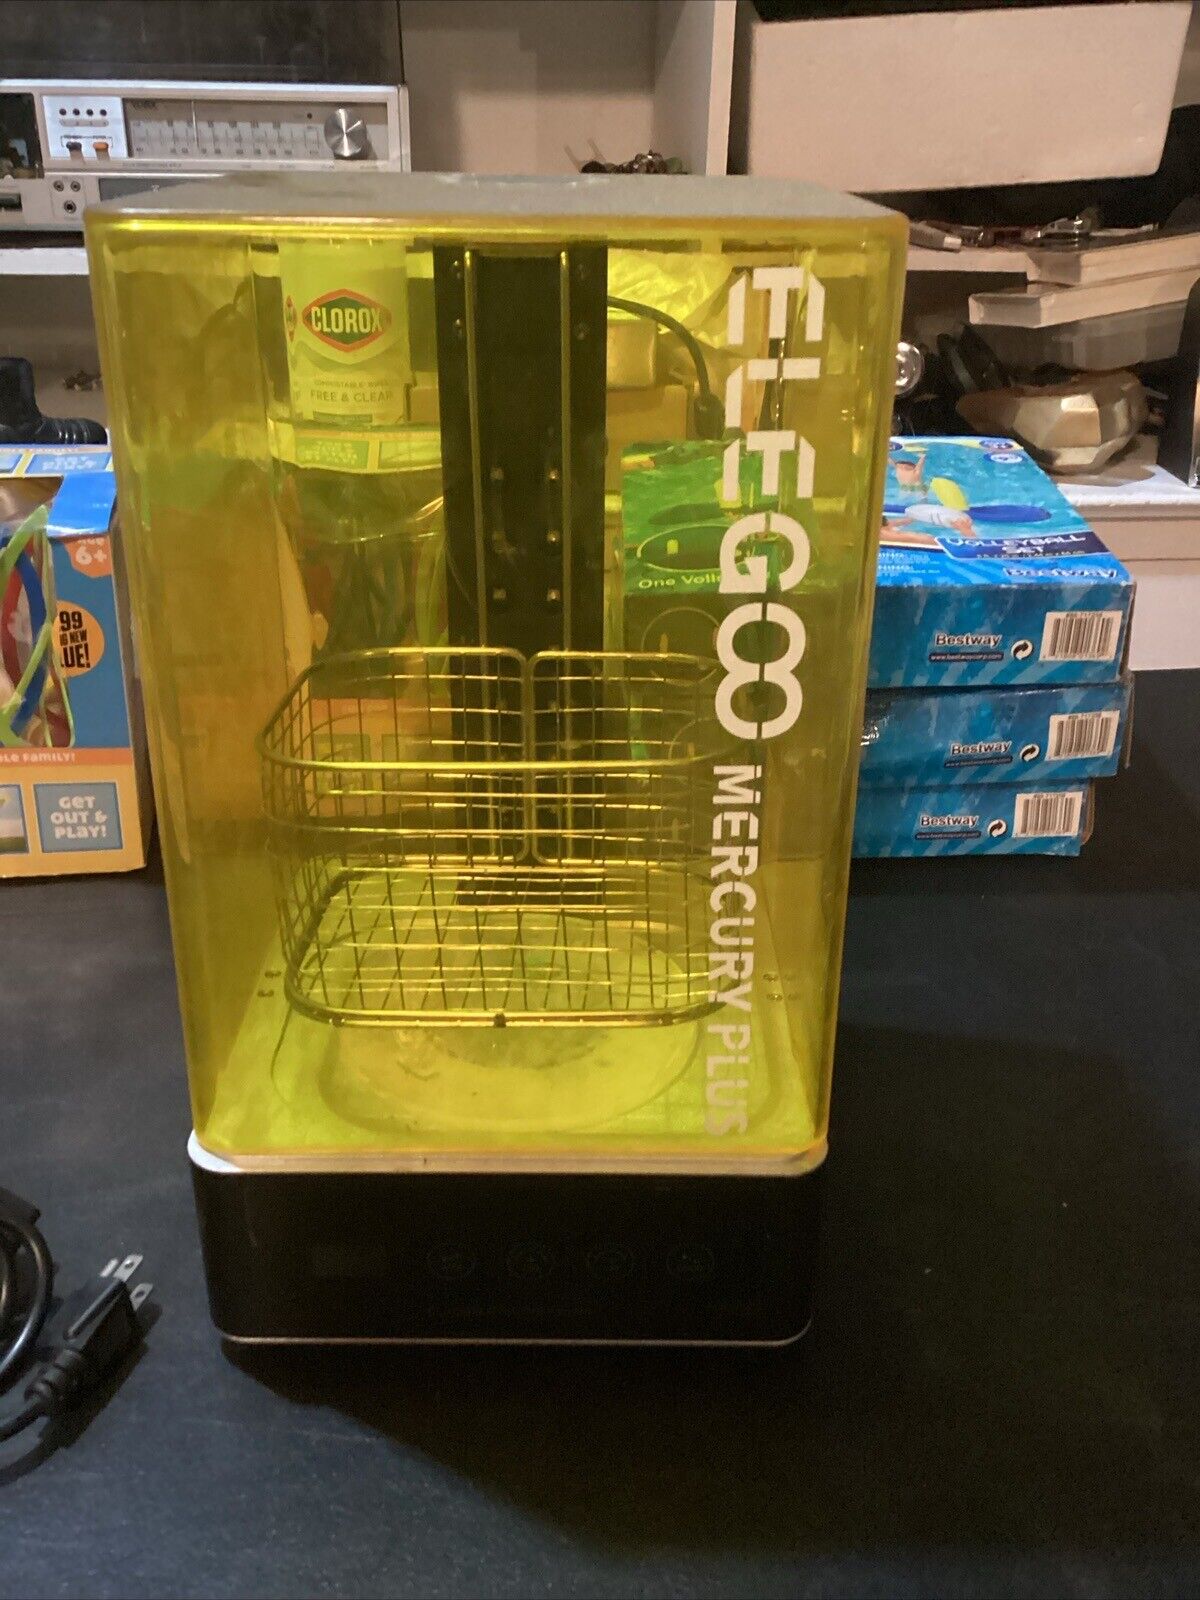 【PRE-OWNED GOOD USED】ELEGOO Mercury Plus 2.0 Wash and Cure Machine for 3DPrinter